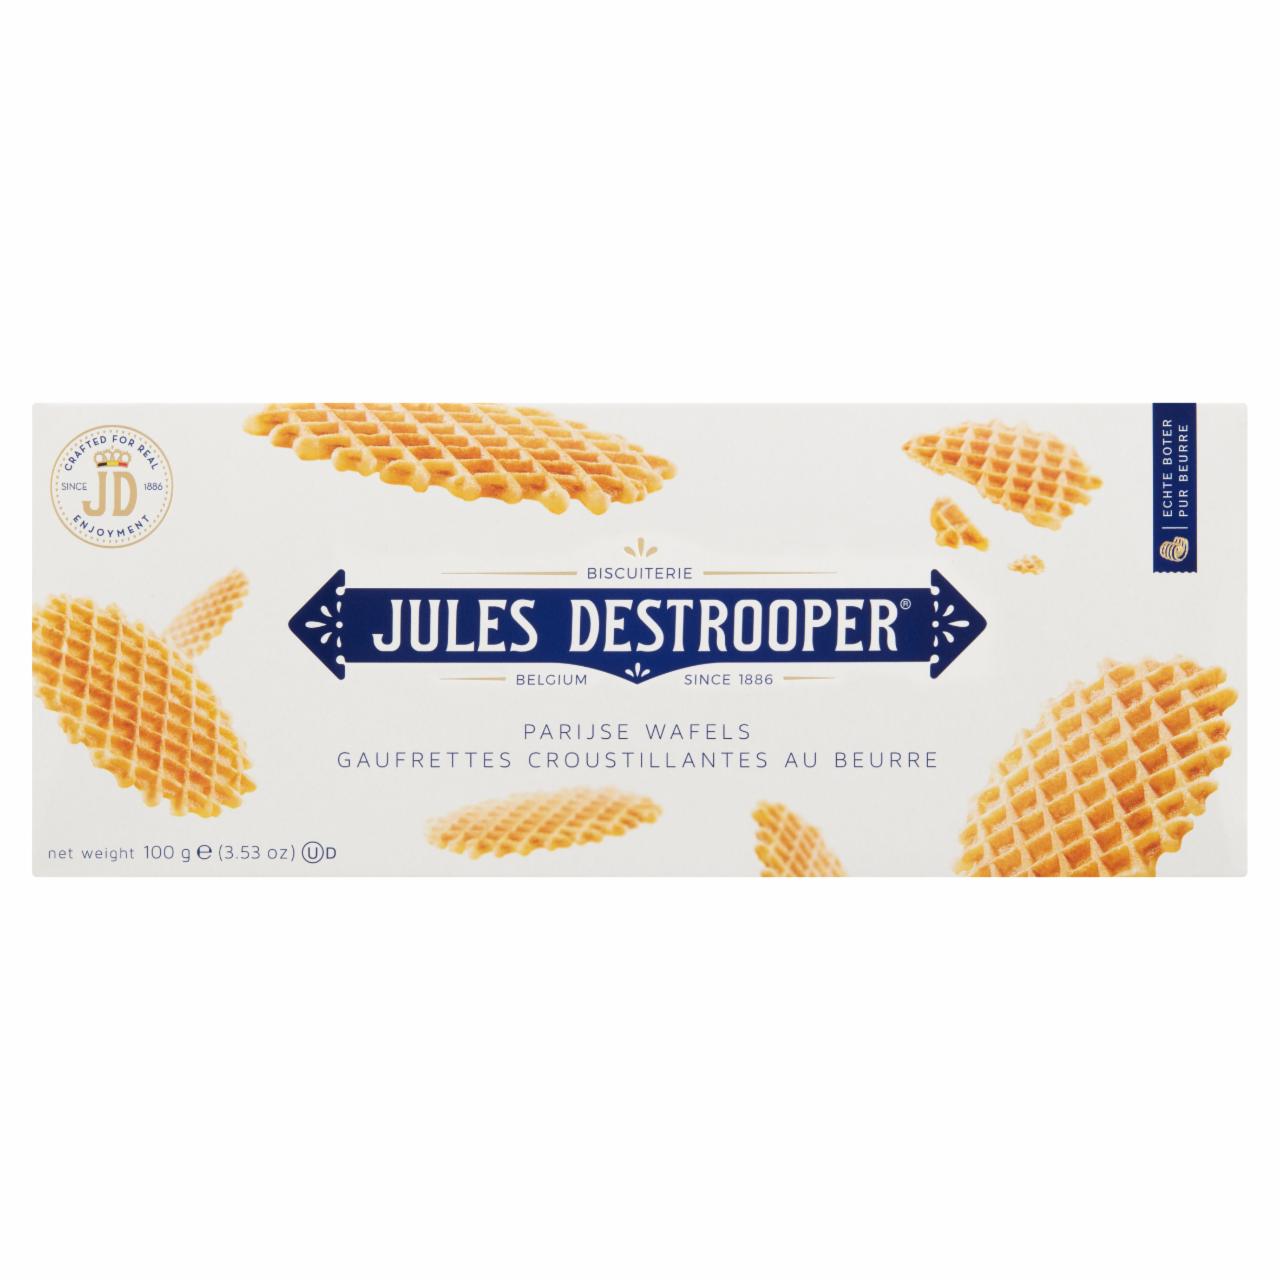 Képek - Jules Destrooper vajas finomkeksz 100 g